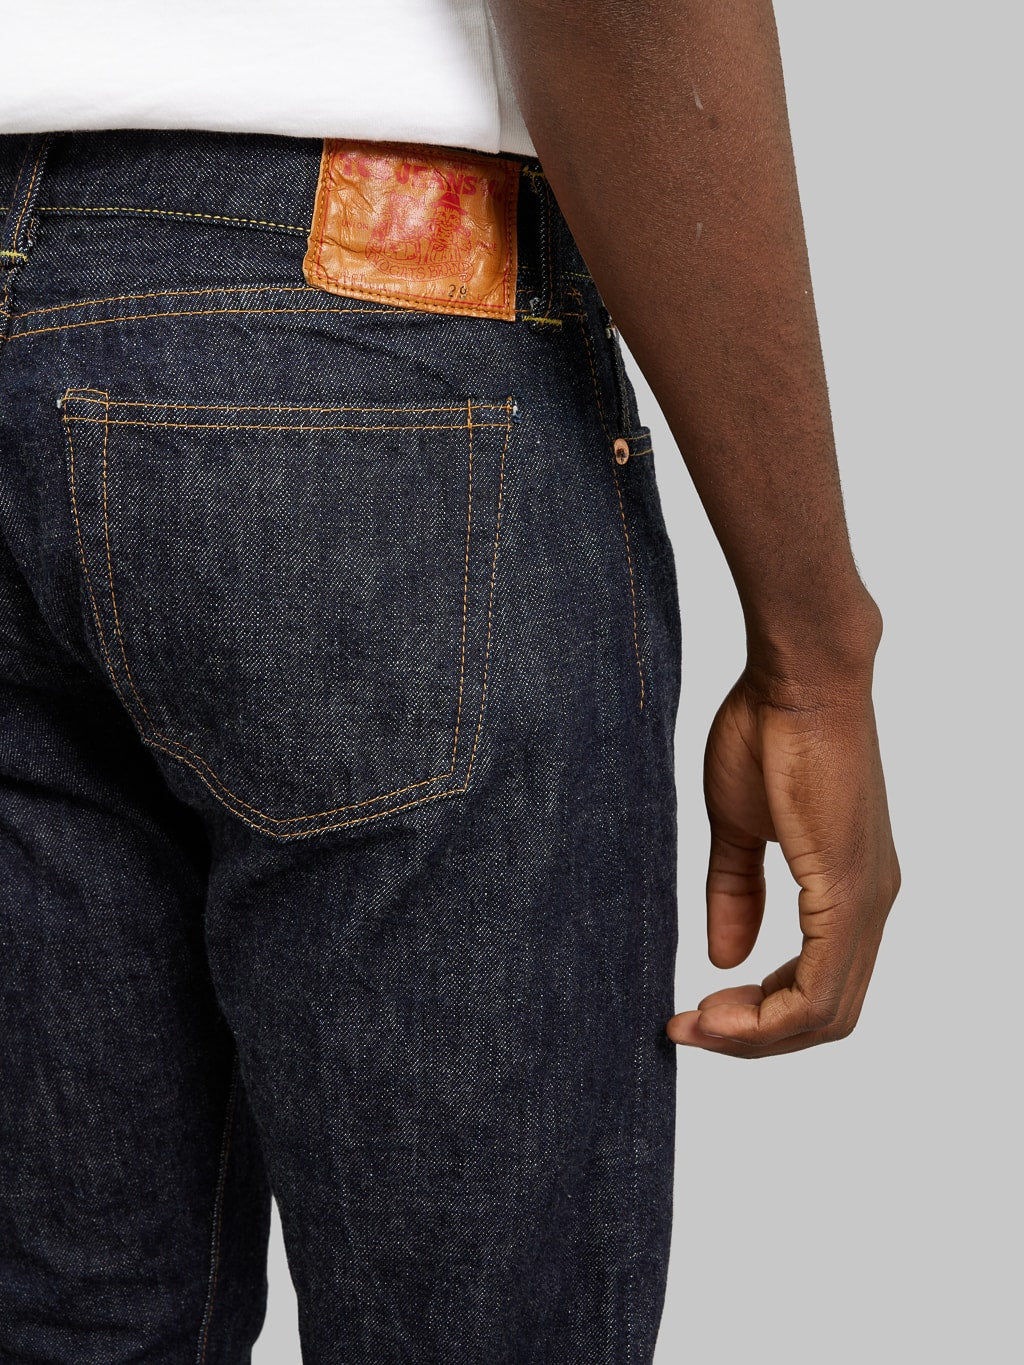 tcb jeans slim 50s selvedge japanese denim back pocket details